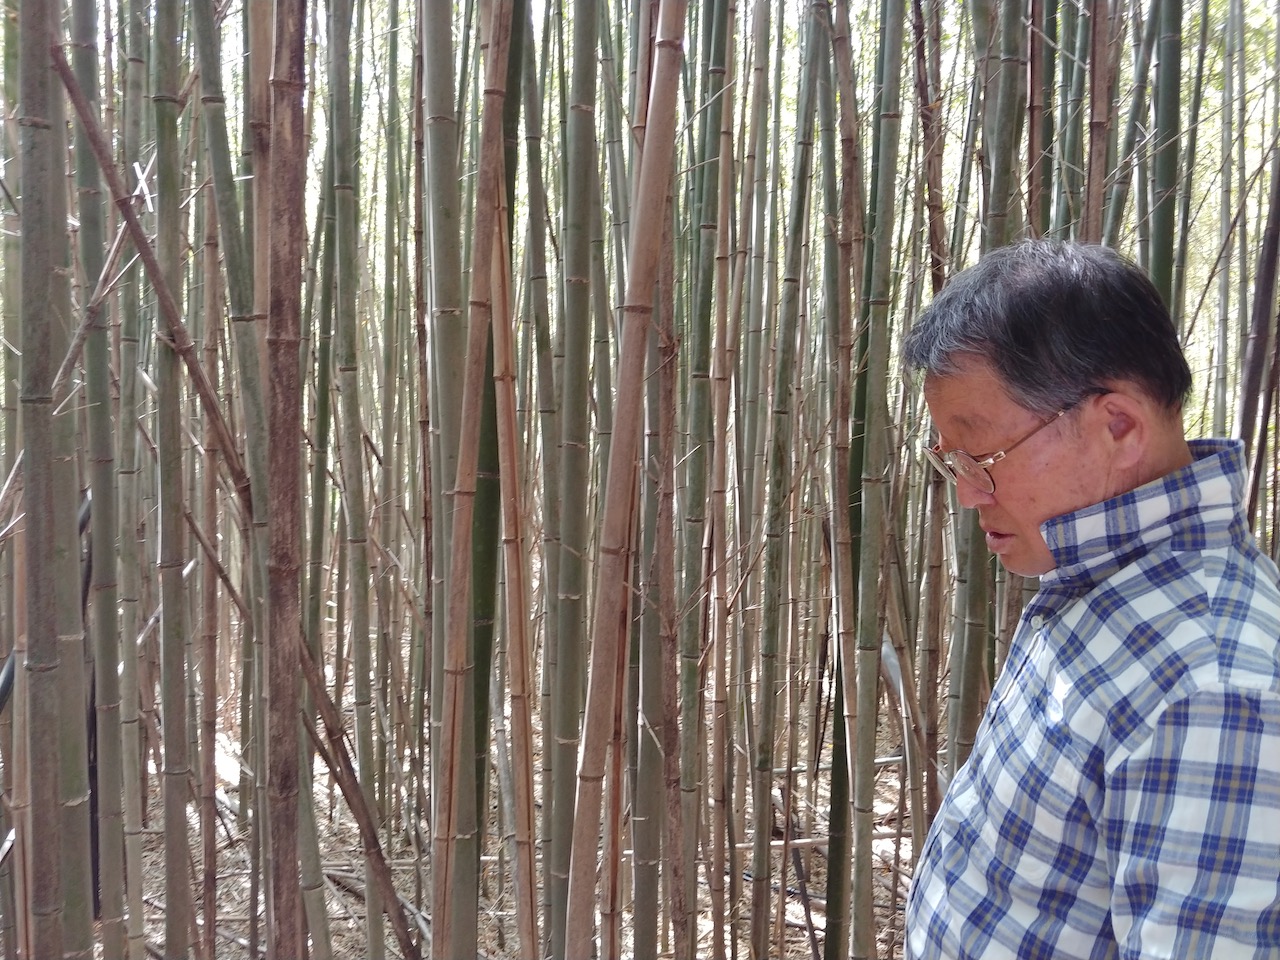 Korean man in plaid shirt in bamboo grove